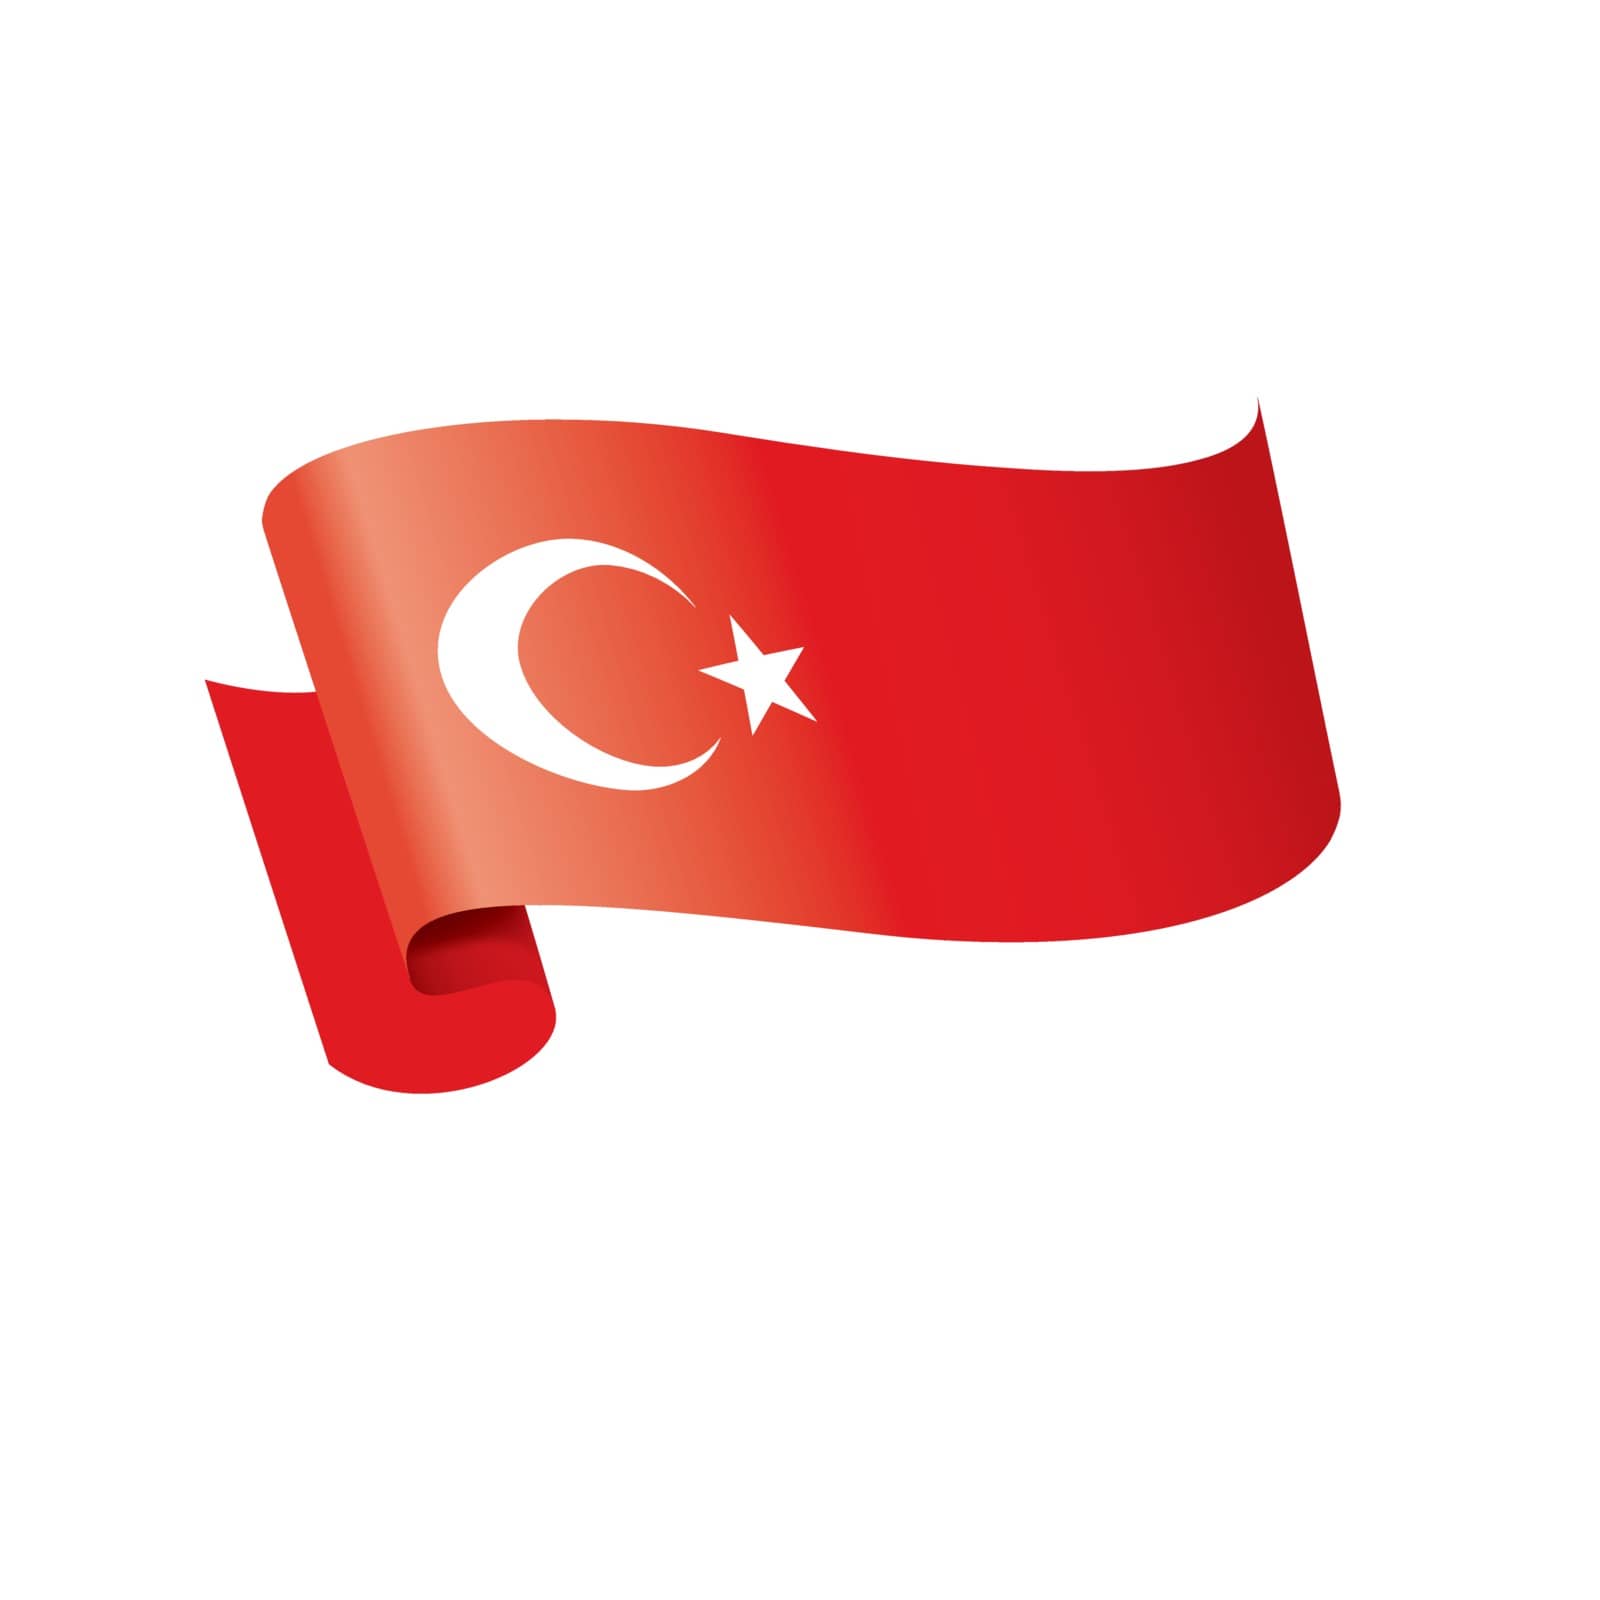 Turkey national flag, vector illustration on a white background